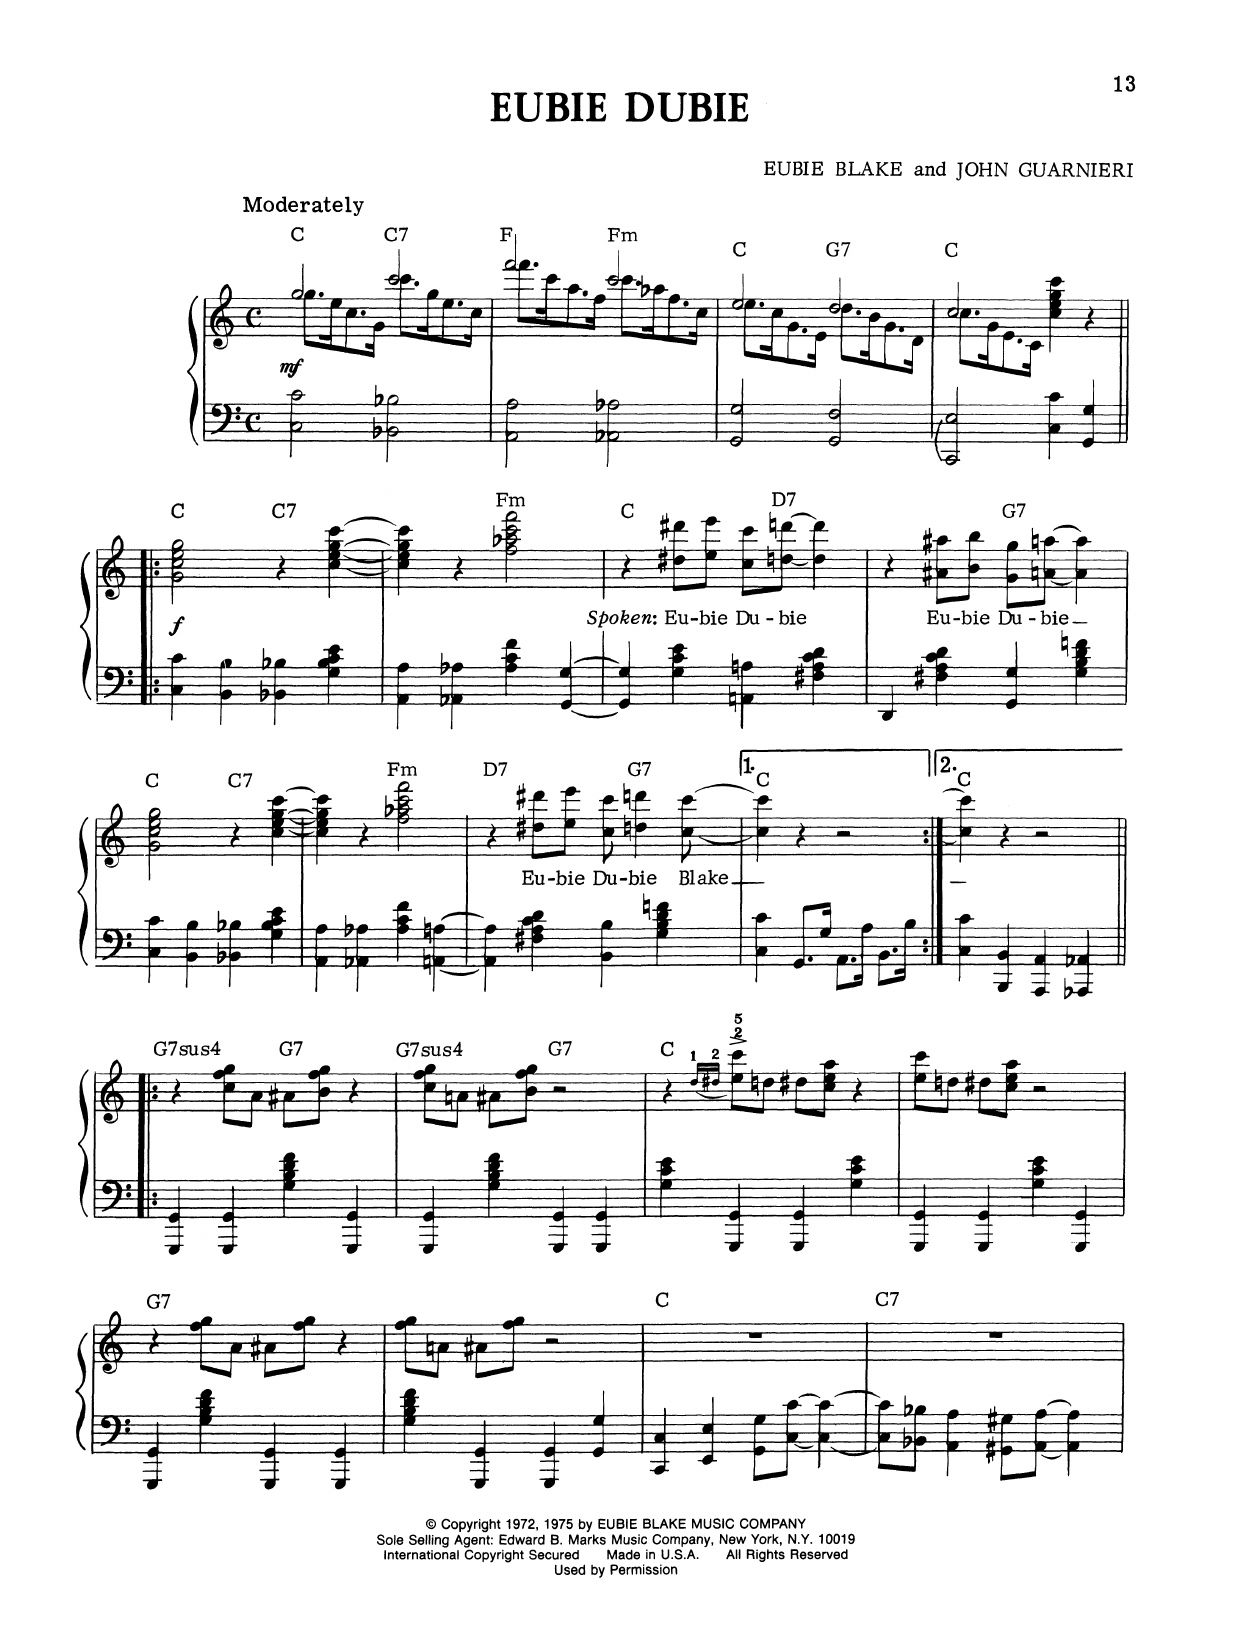 Eubie Blake Eubie Dubie Sheet Music Notes & Chords for Piano Solo - Download or Print PDF